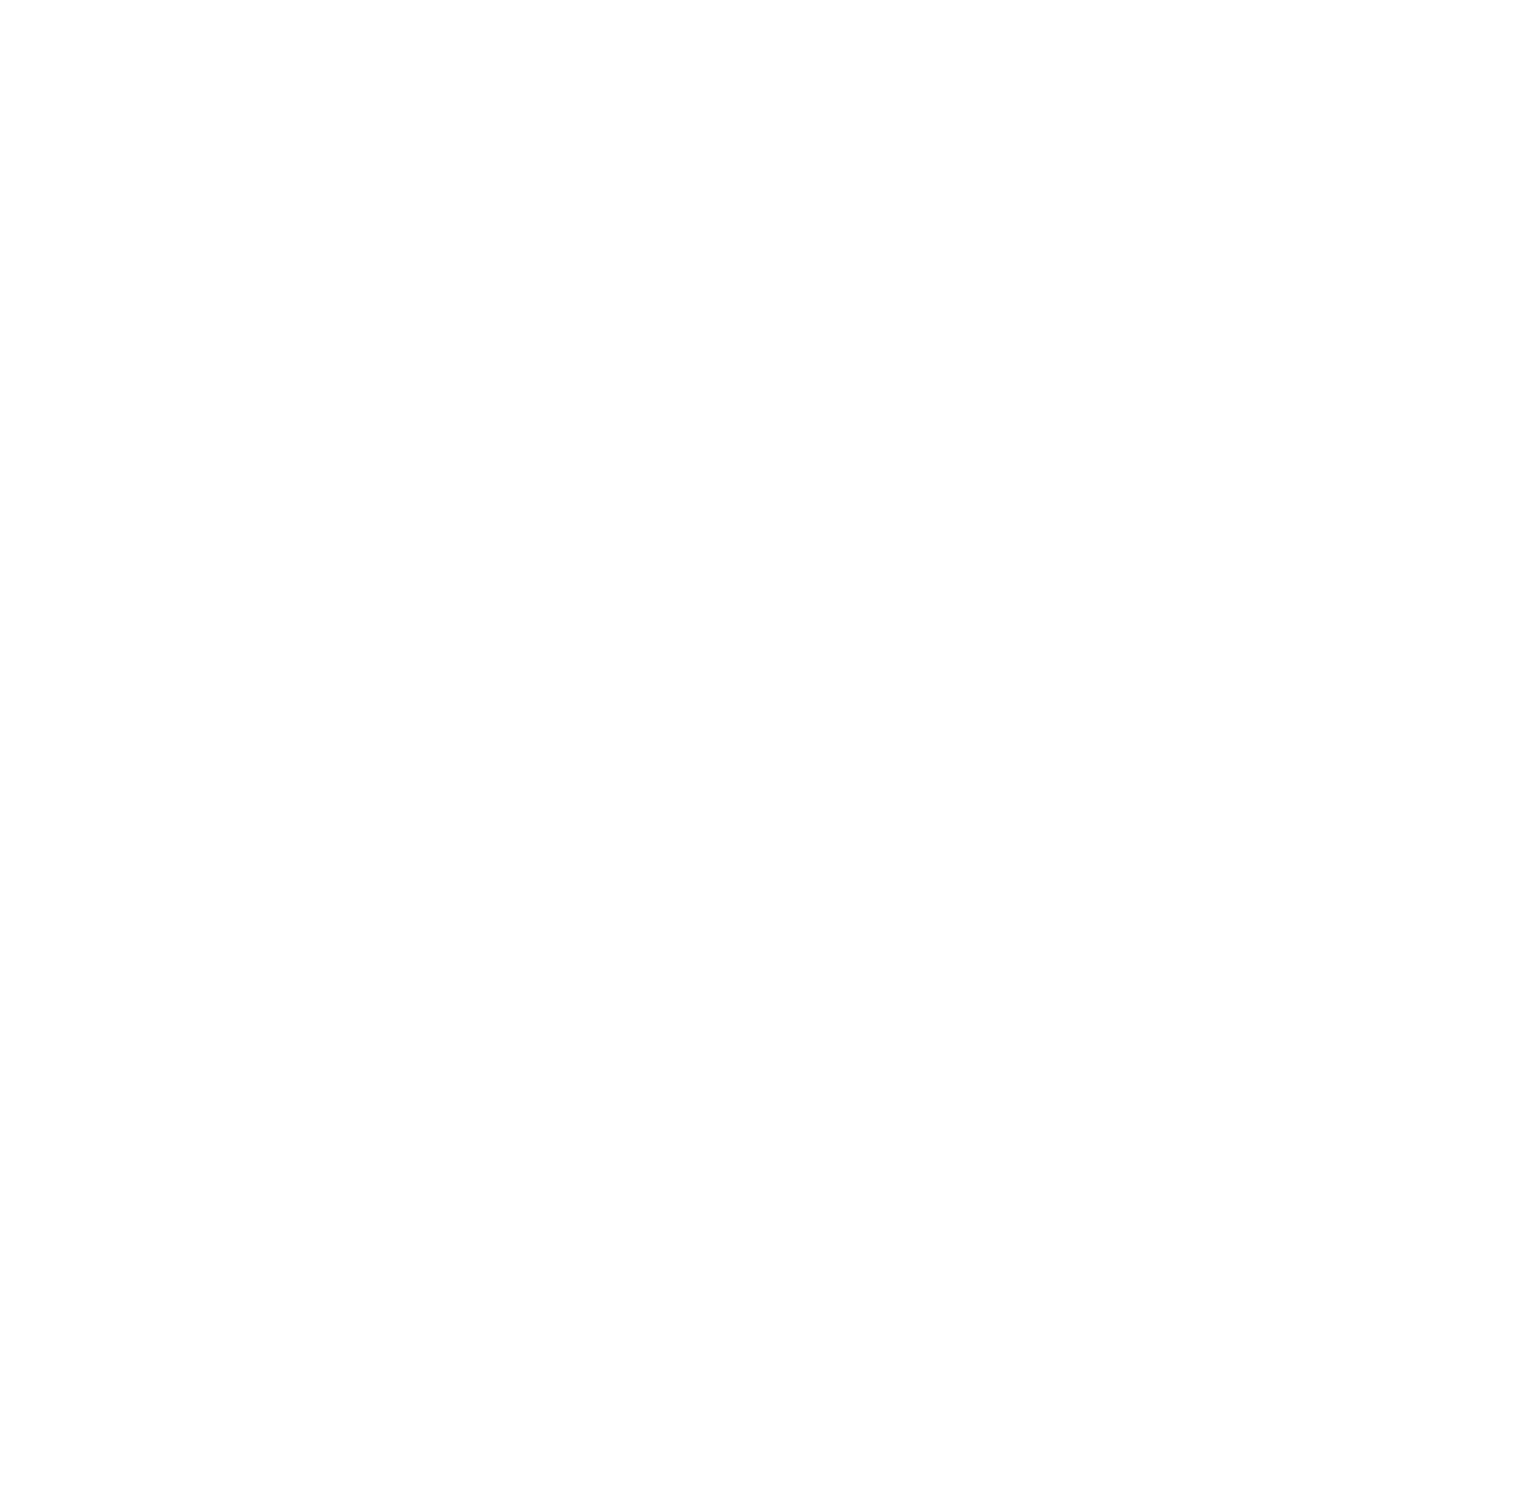 Kuwait National Cinema Company logo for dark backgrounds (transparent PNG)